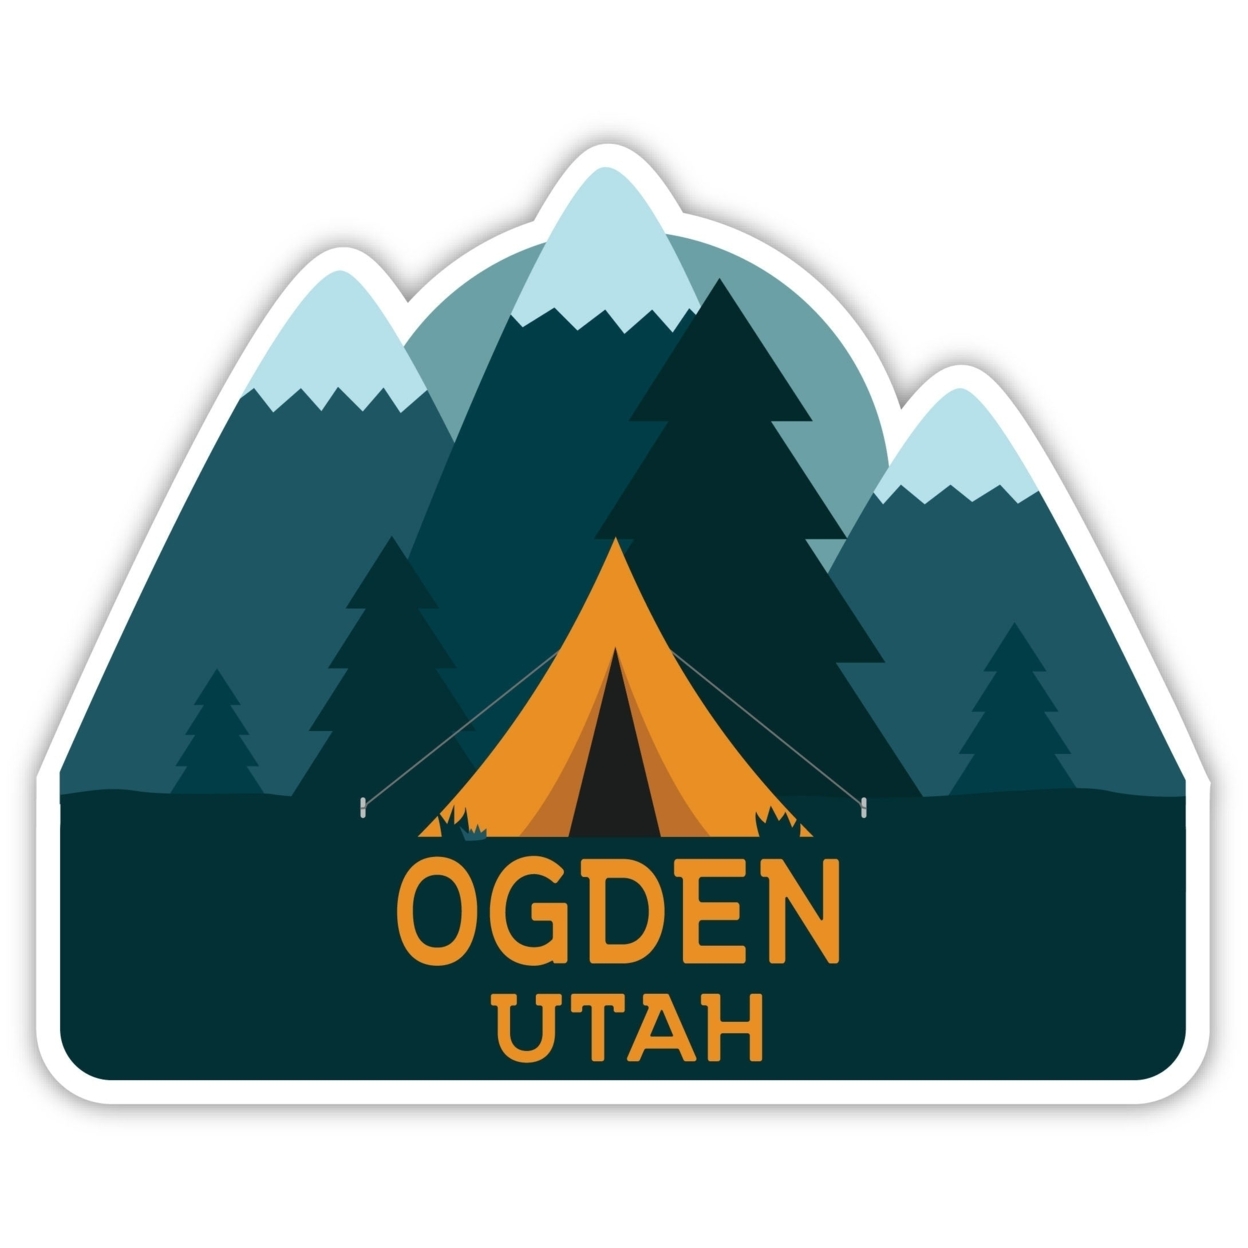 Ogden Utah Souvenir Decorative Stickers (Choose Theme And Size) - Single Unit, 2-Inch, Camp Life